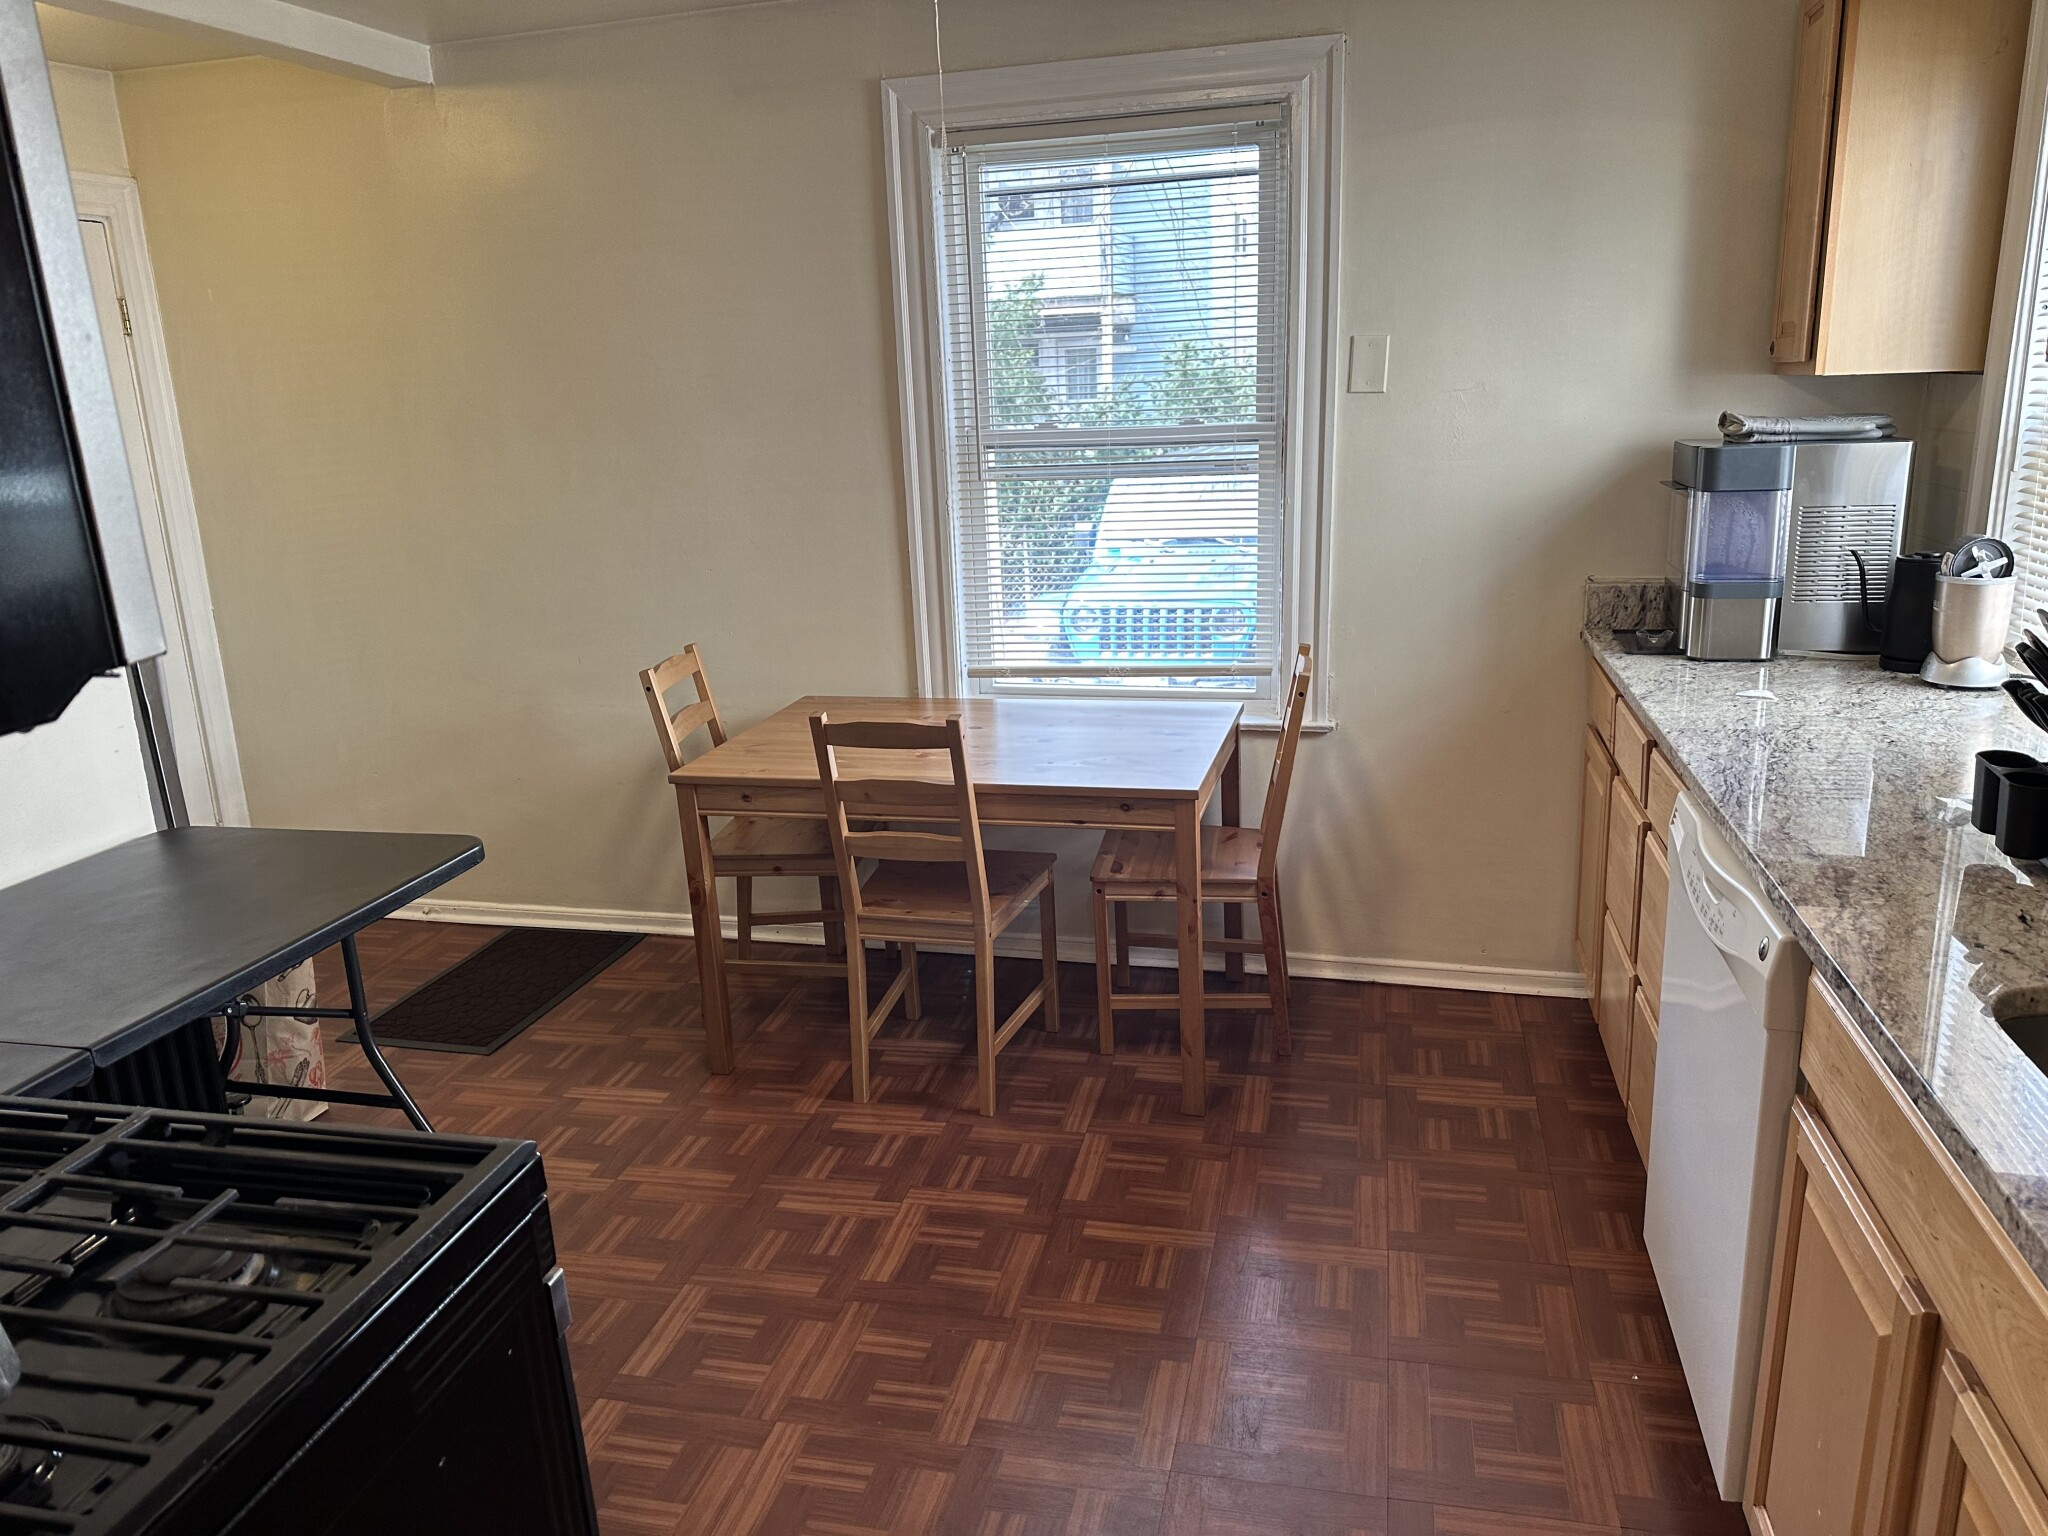 Photos of apartment on Brock St.,Boston MA 02135